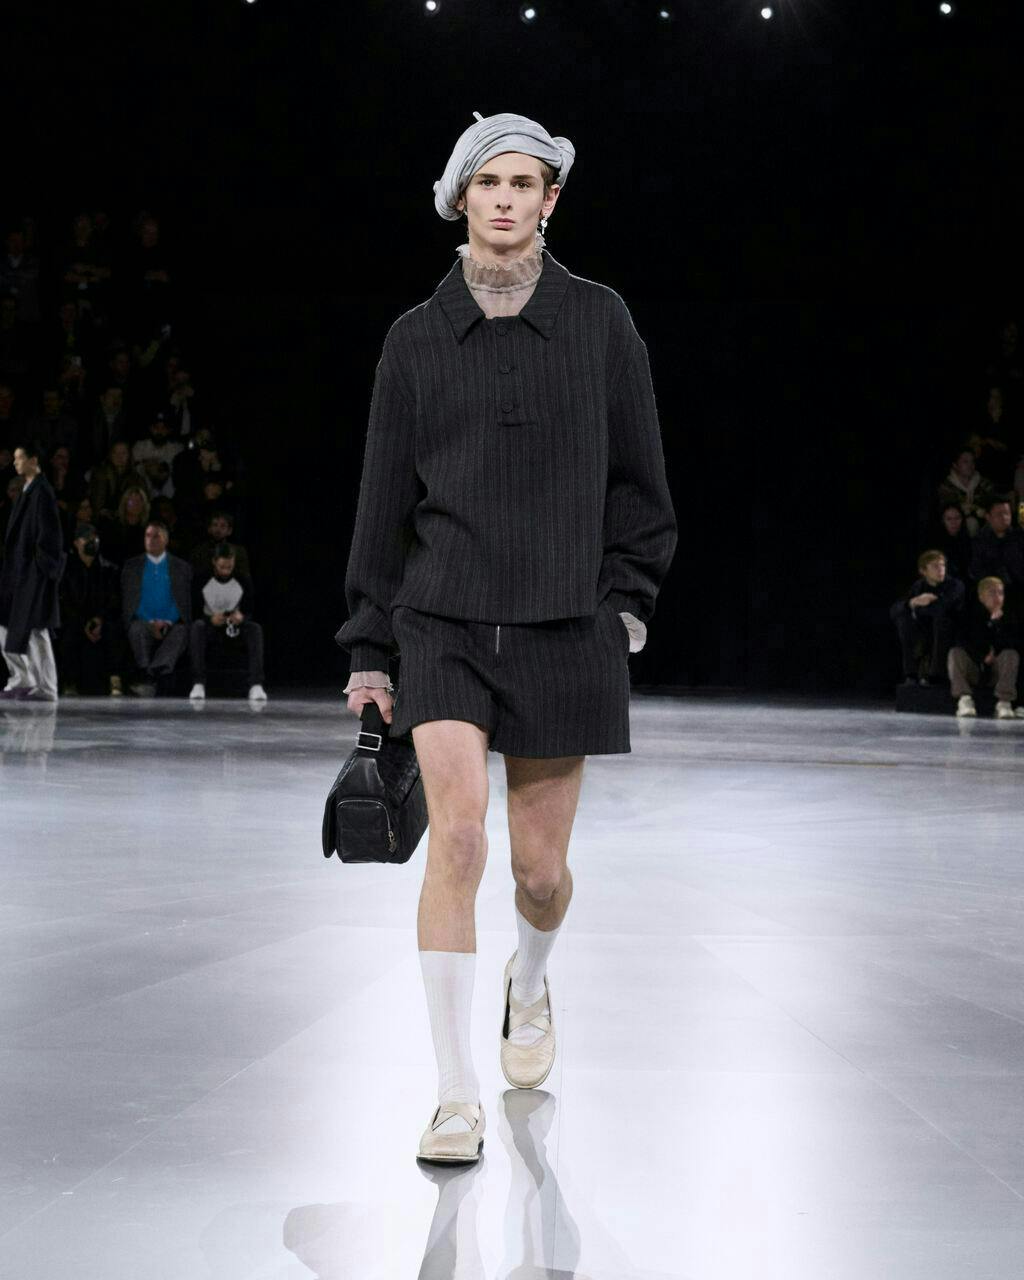 fashion coat adult male man person skirt lady face handbag